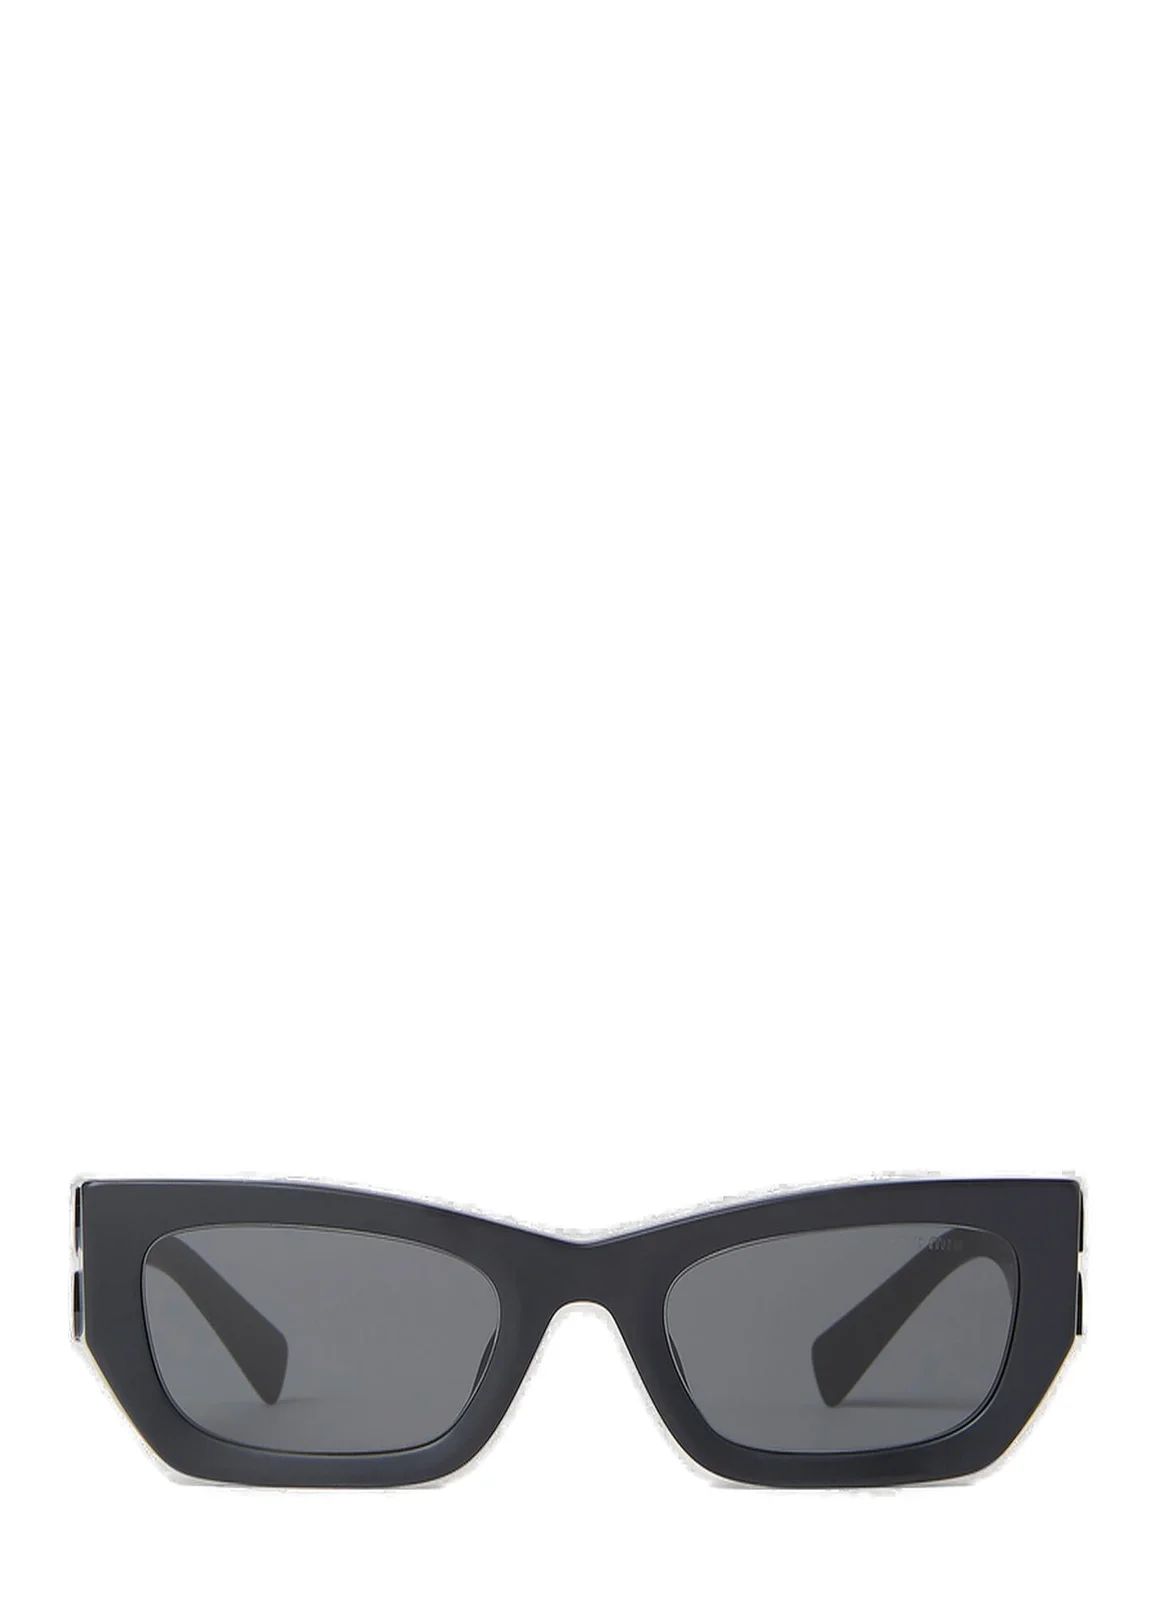 Miu Miu Eyewear Rectangular Frame Sunglasses | Cettire Global